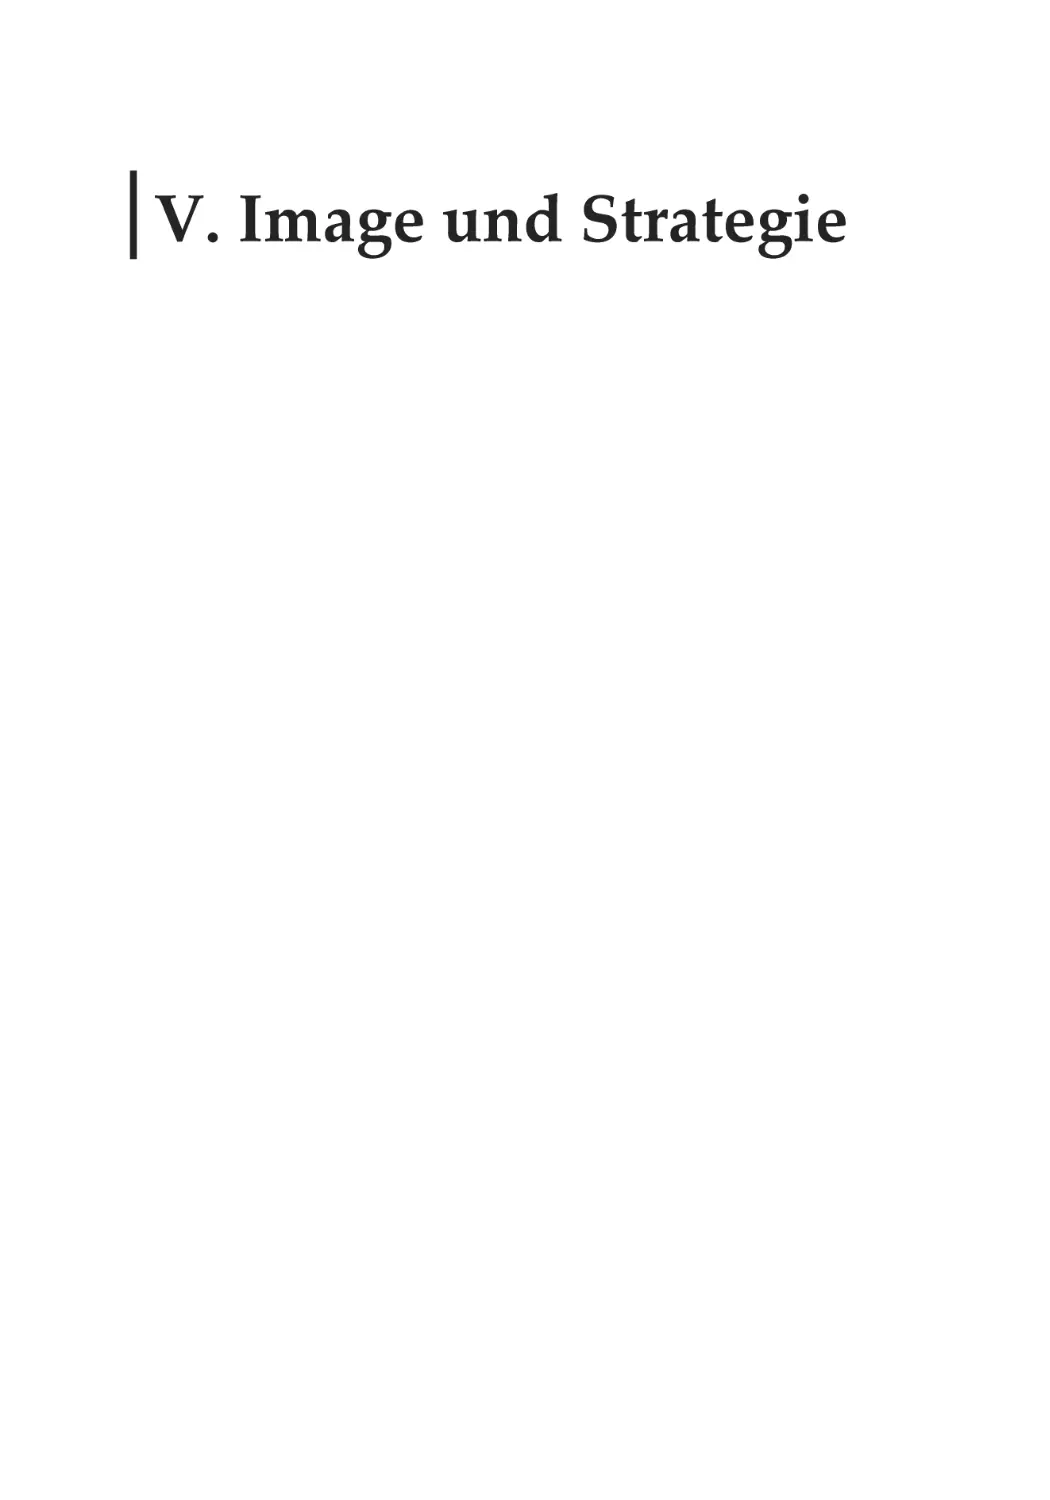 V. Image und Strategie